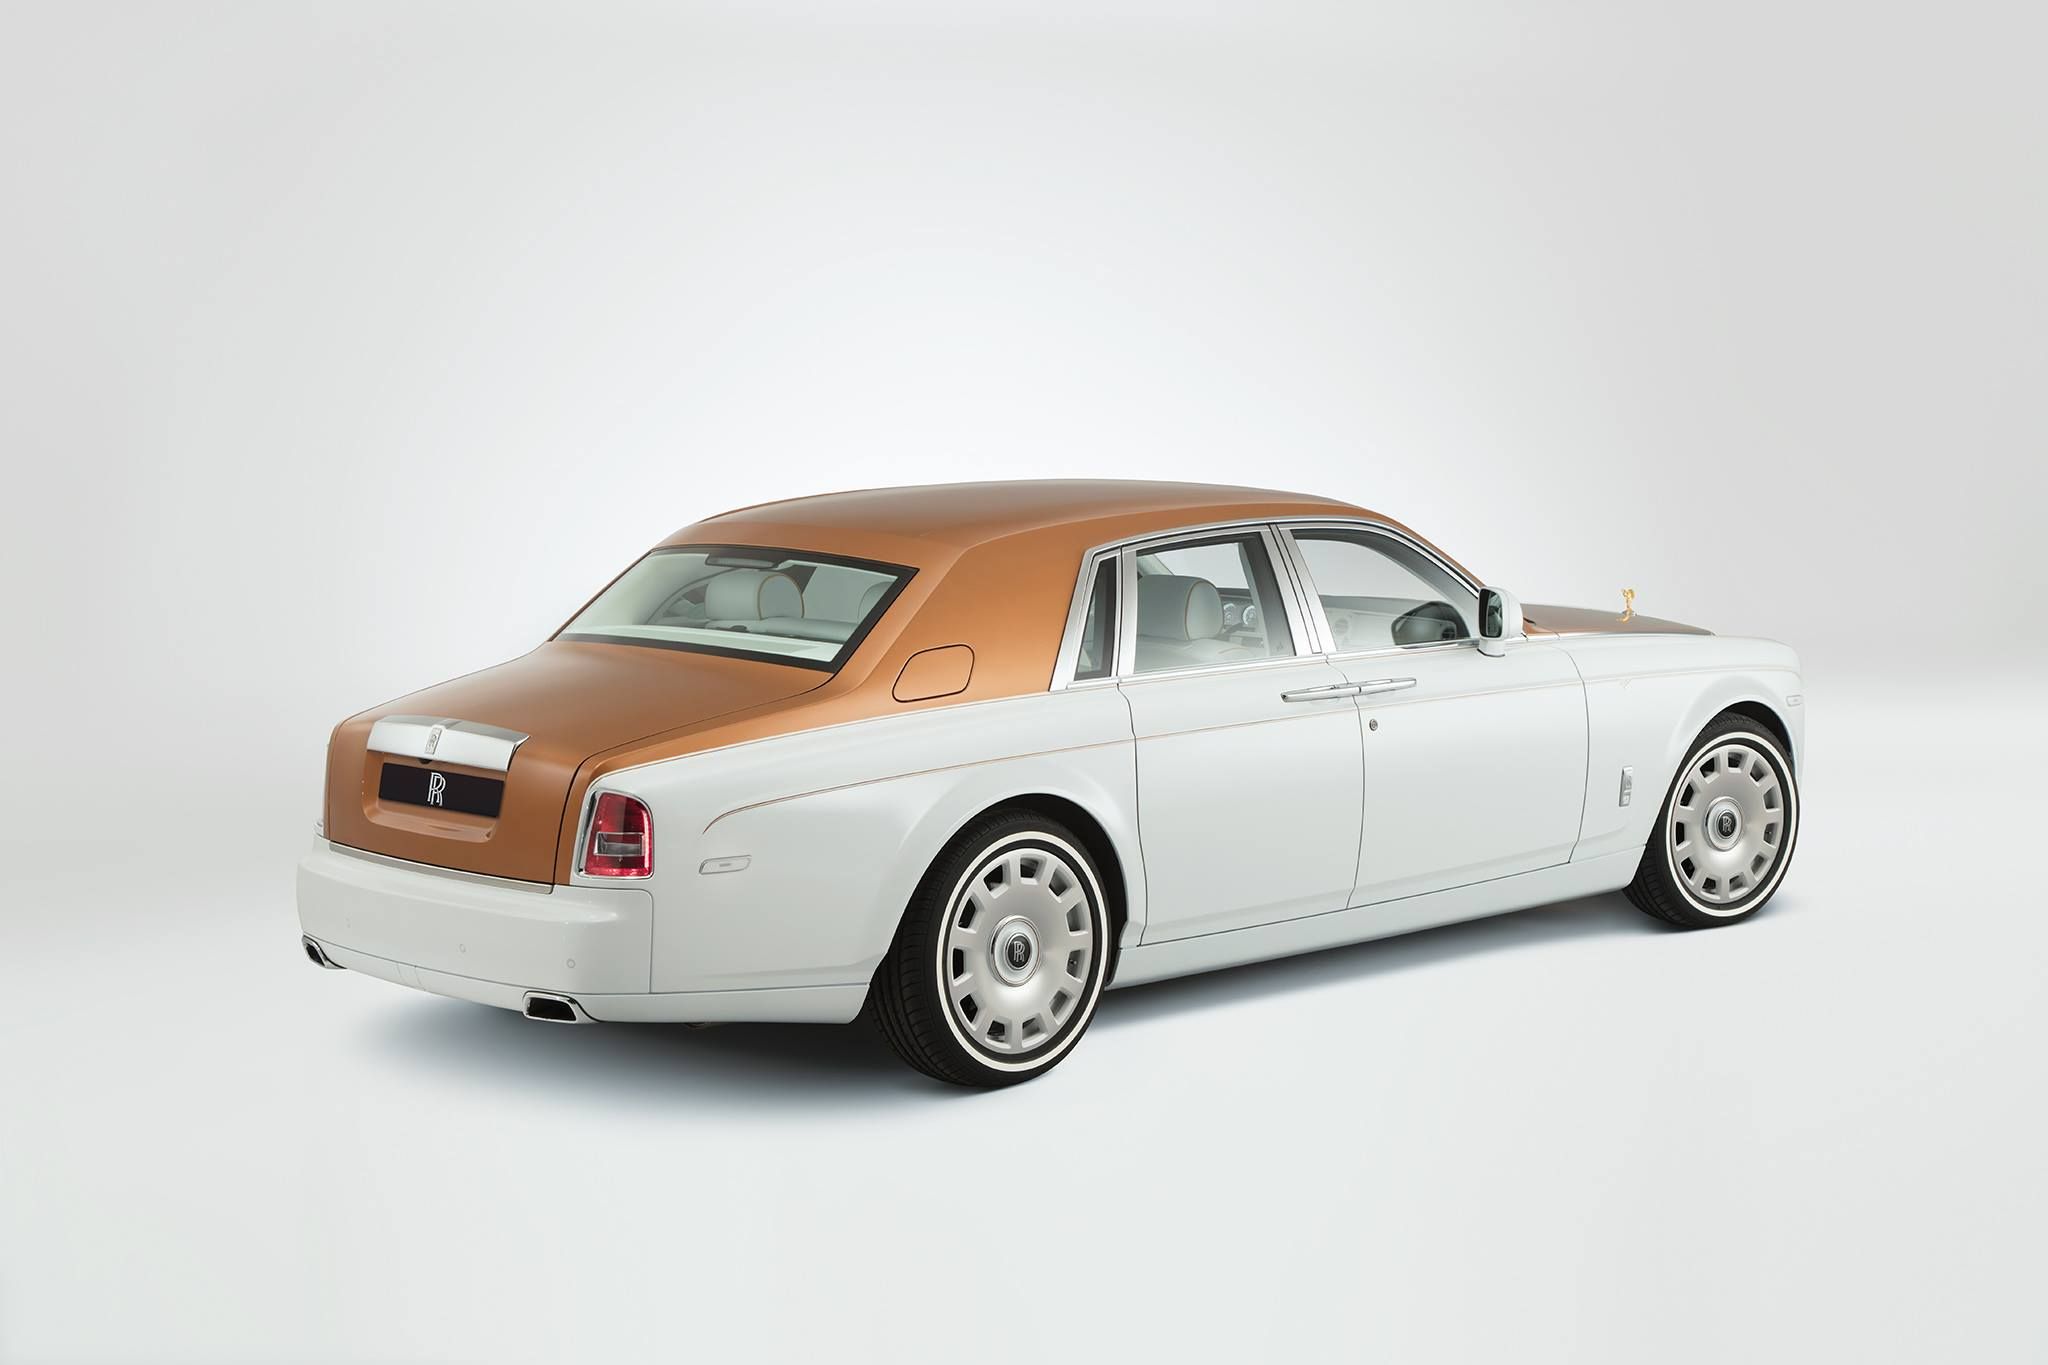 2017 Rolls-Royce Phantom Inspired By Sheikh Zayed Grand Mosque